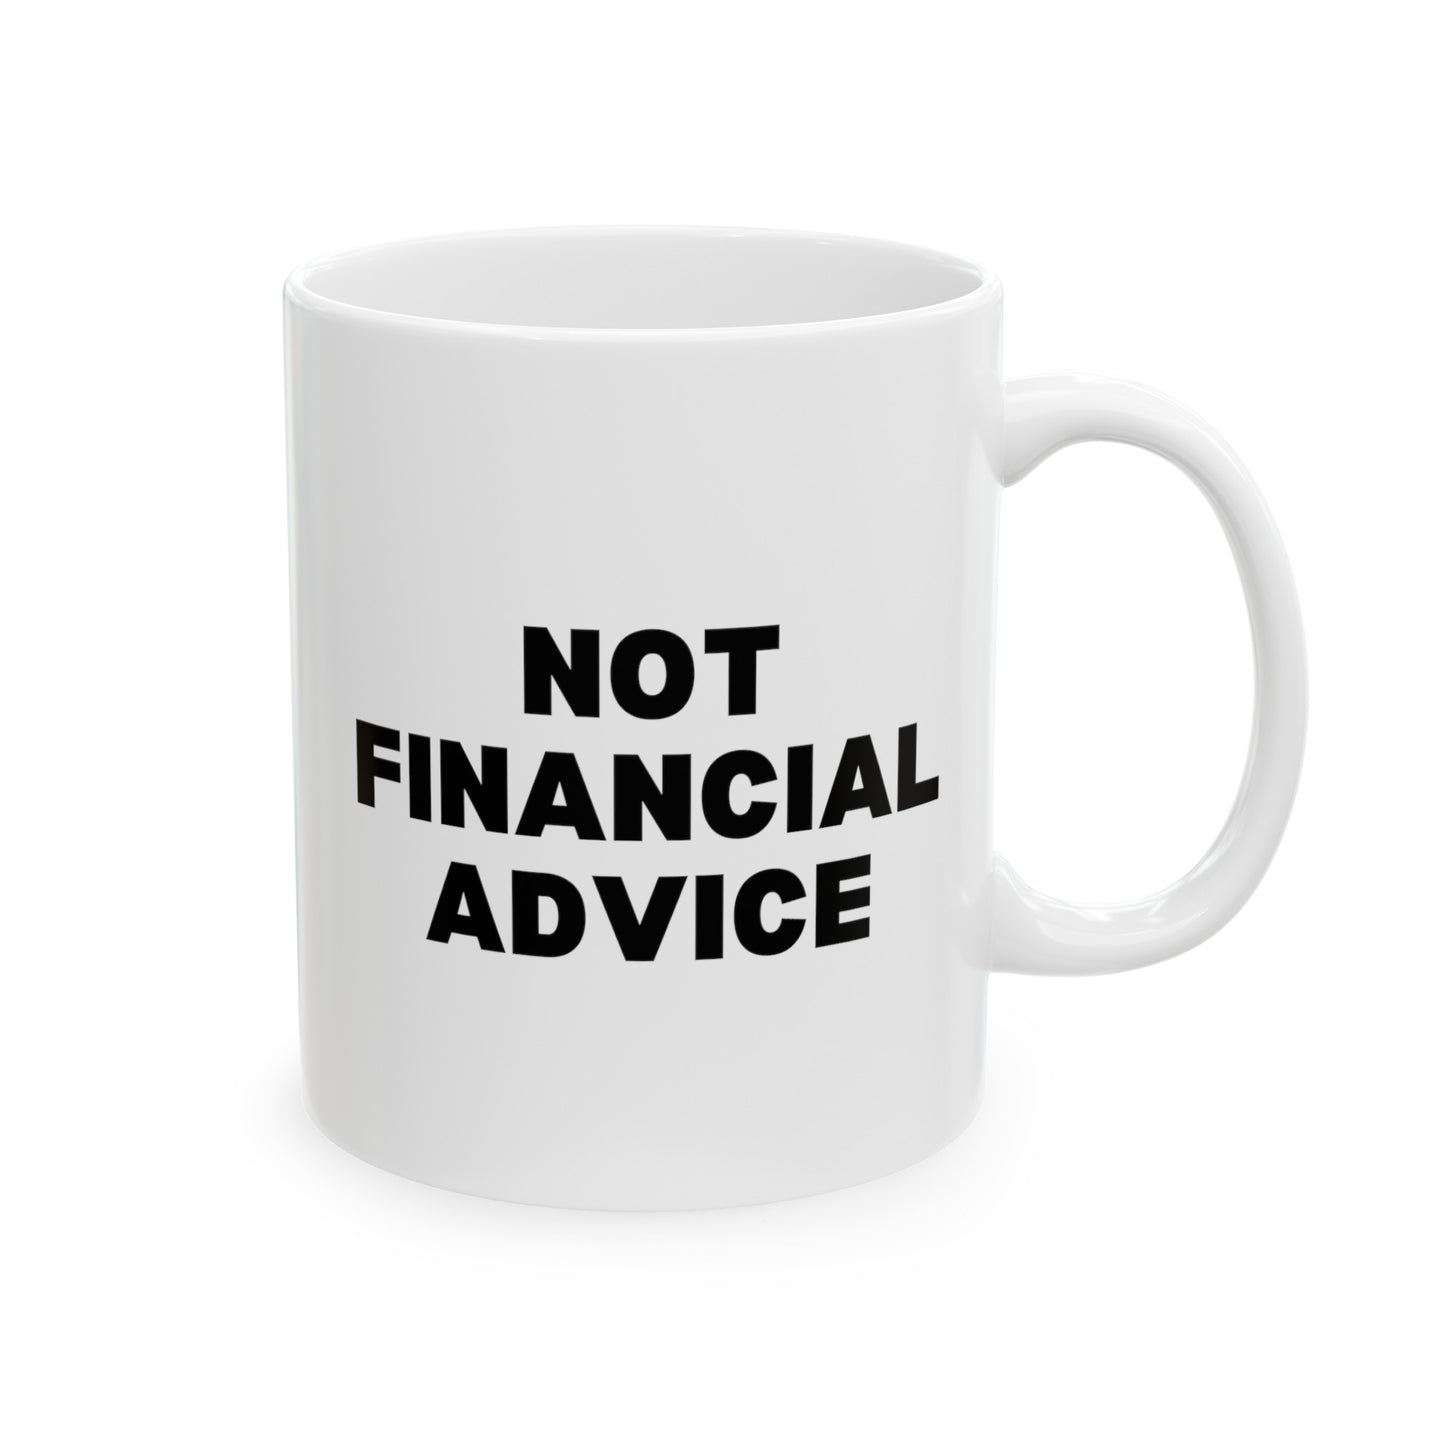 Not Financial Advice 11oz white funny large coffee mug gift for finance bro advisor specialist joke waveywares wavey wares wavywares wavy wares